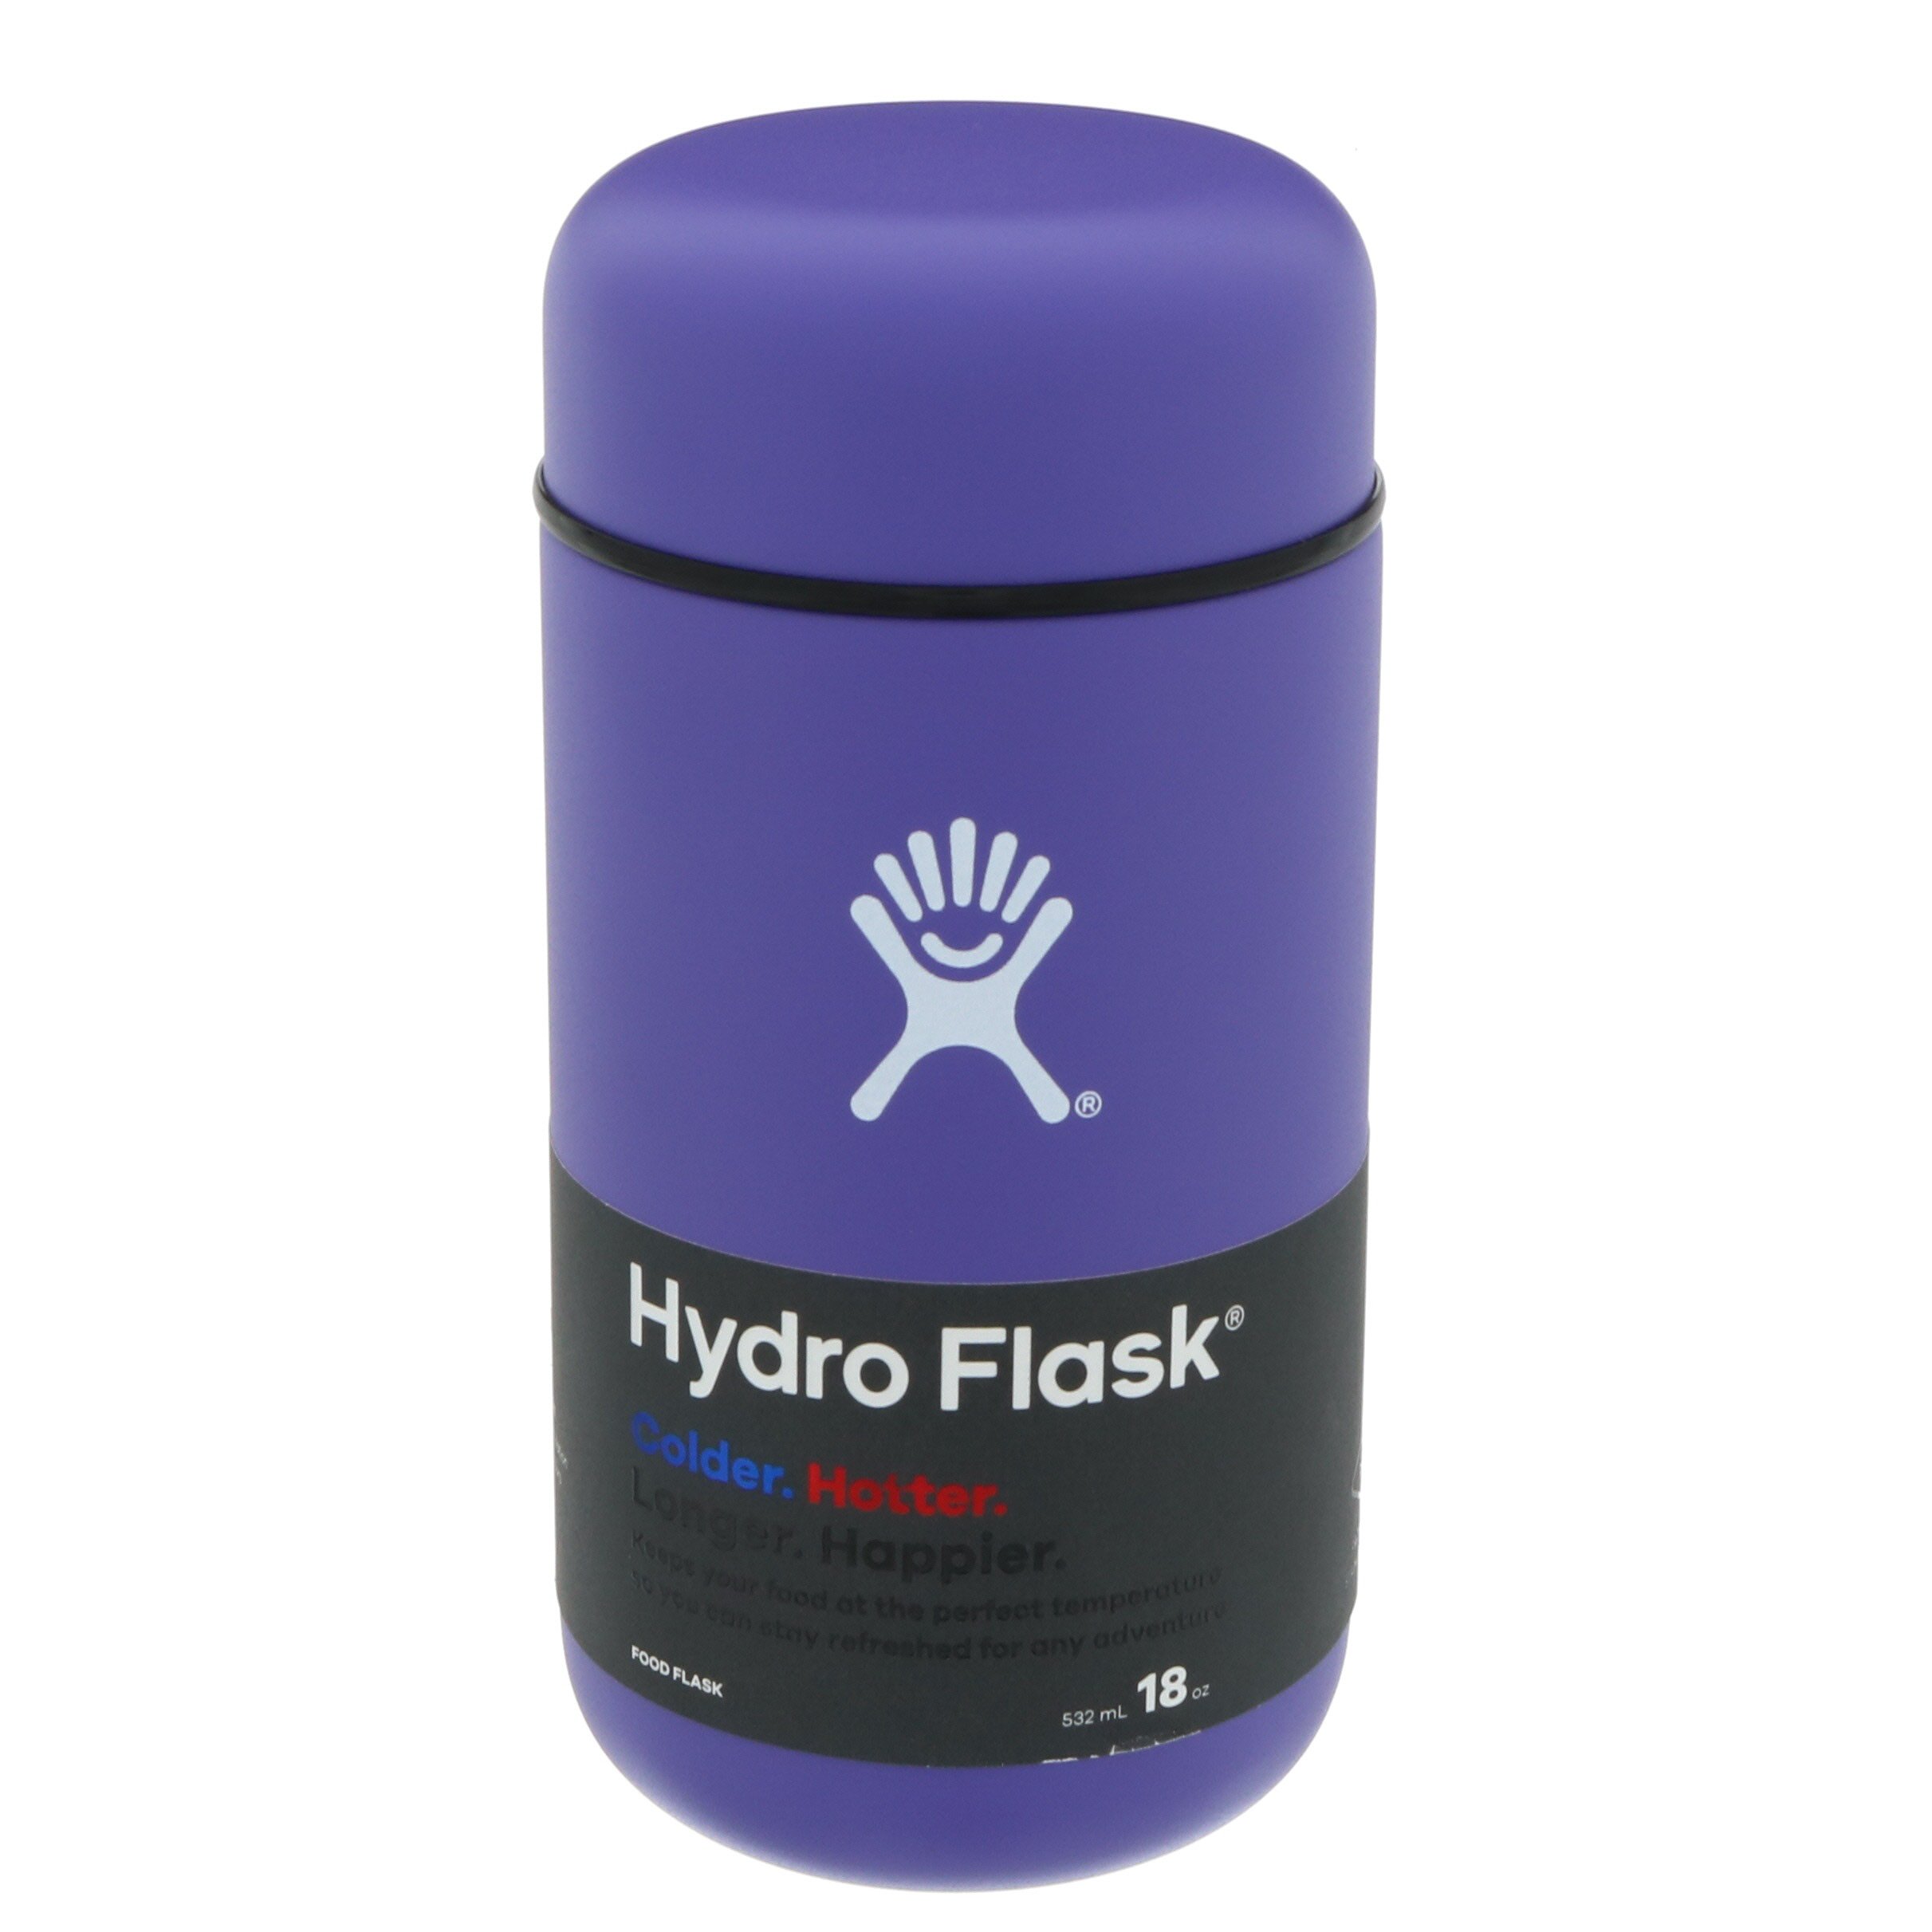 hydro flask 18 oz food flask